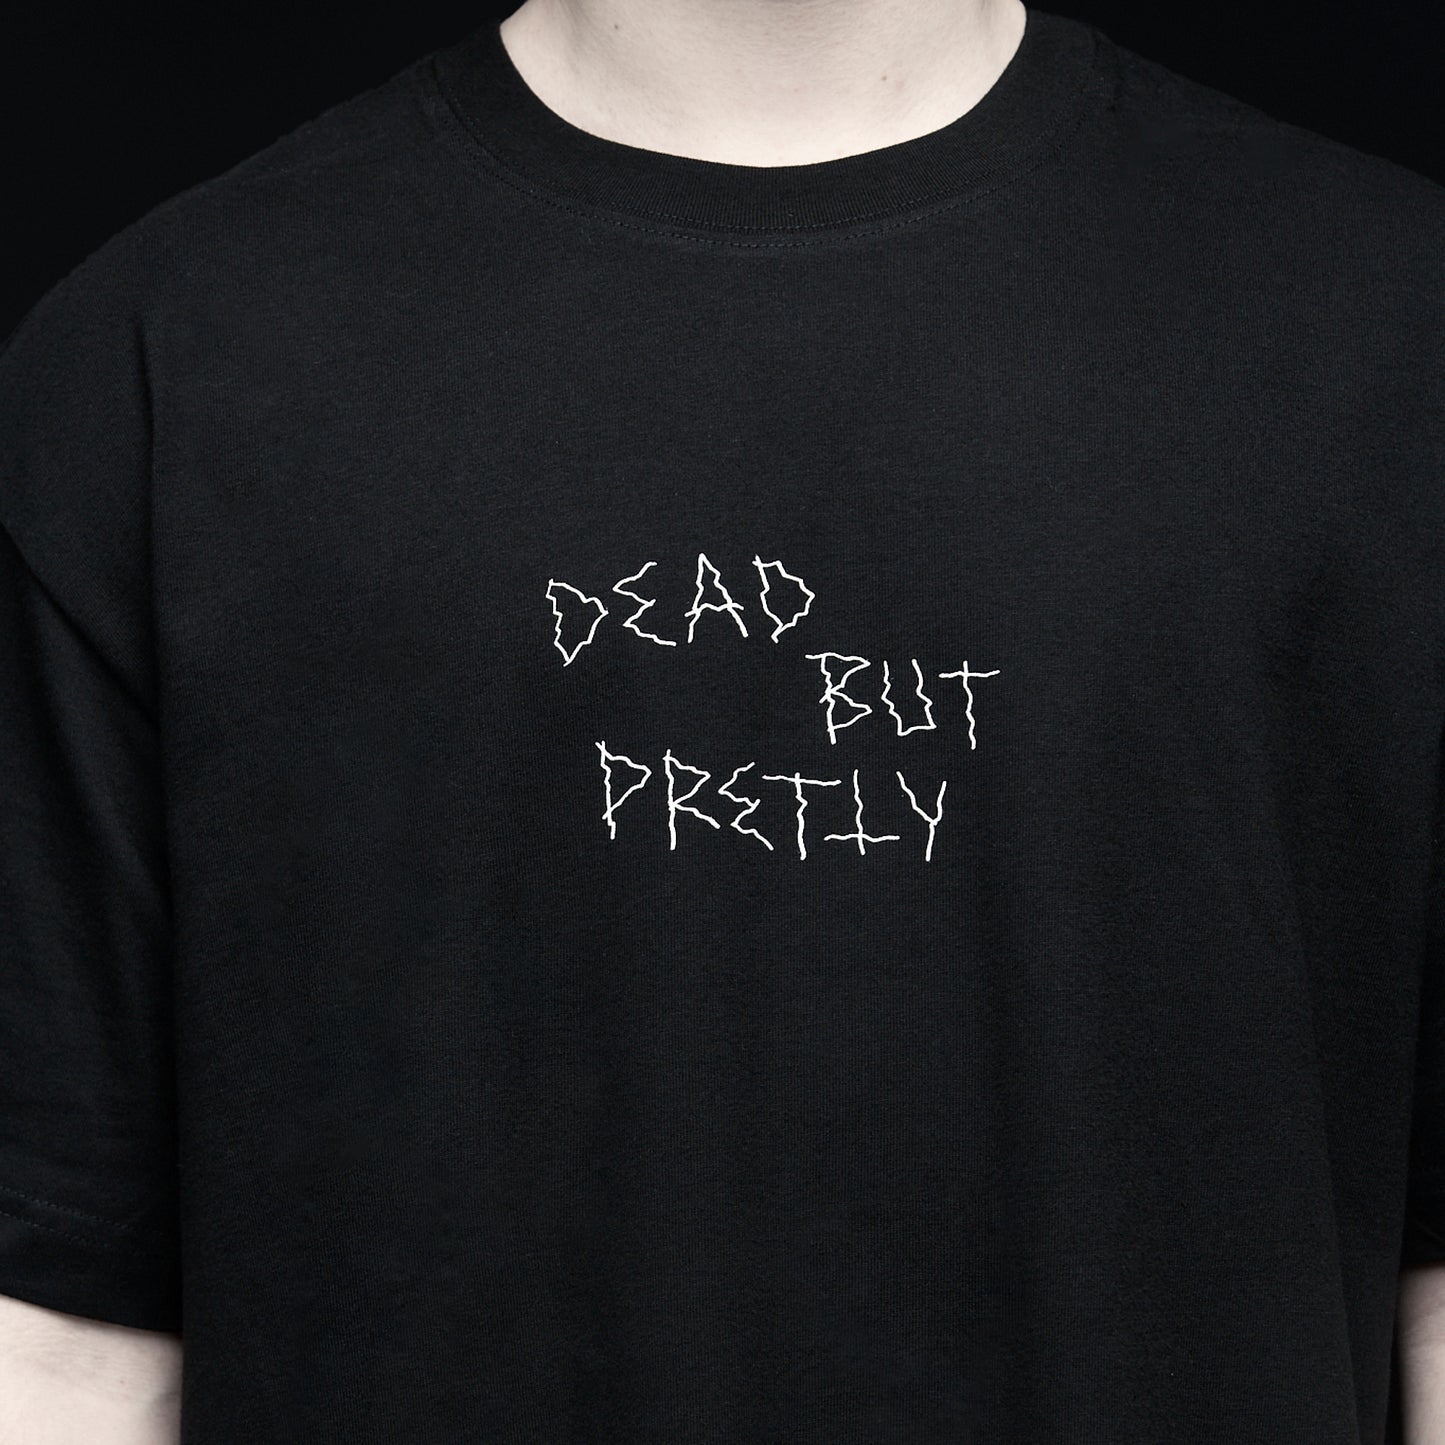 «Dead But Pretty» T-shirt